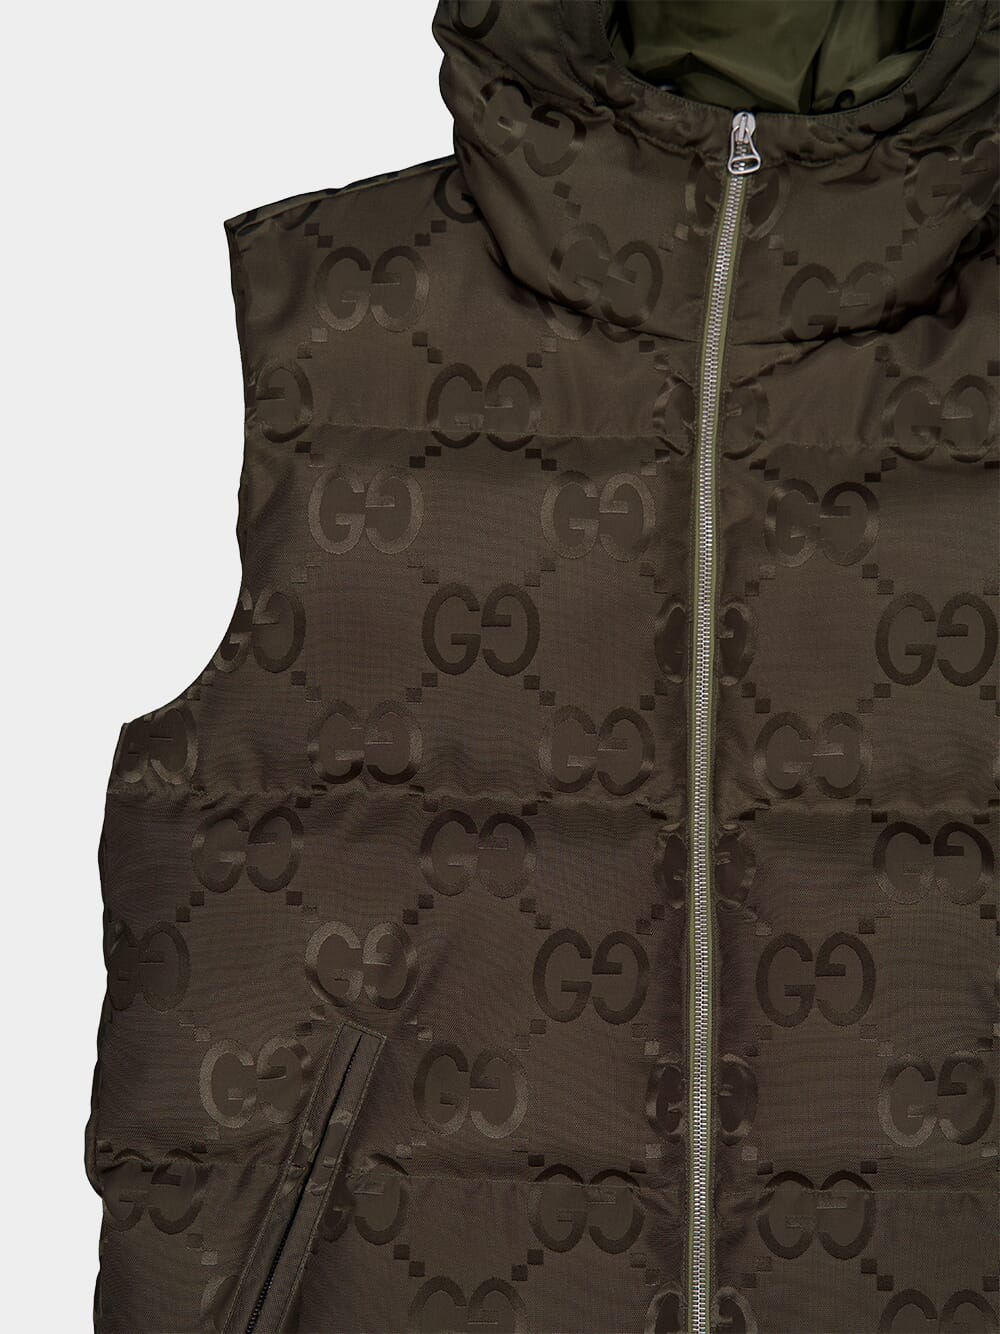 GucciJumbo GG Canvas Down Vest at Fashion Clinic